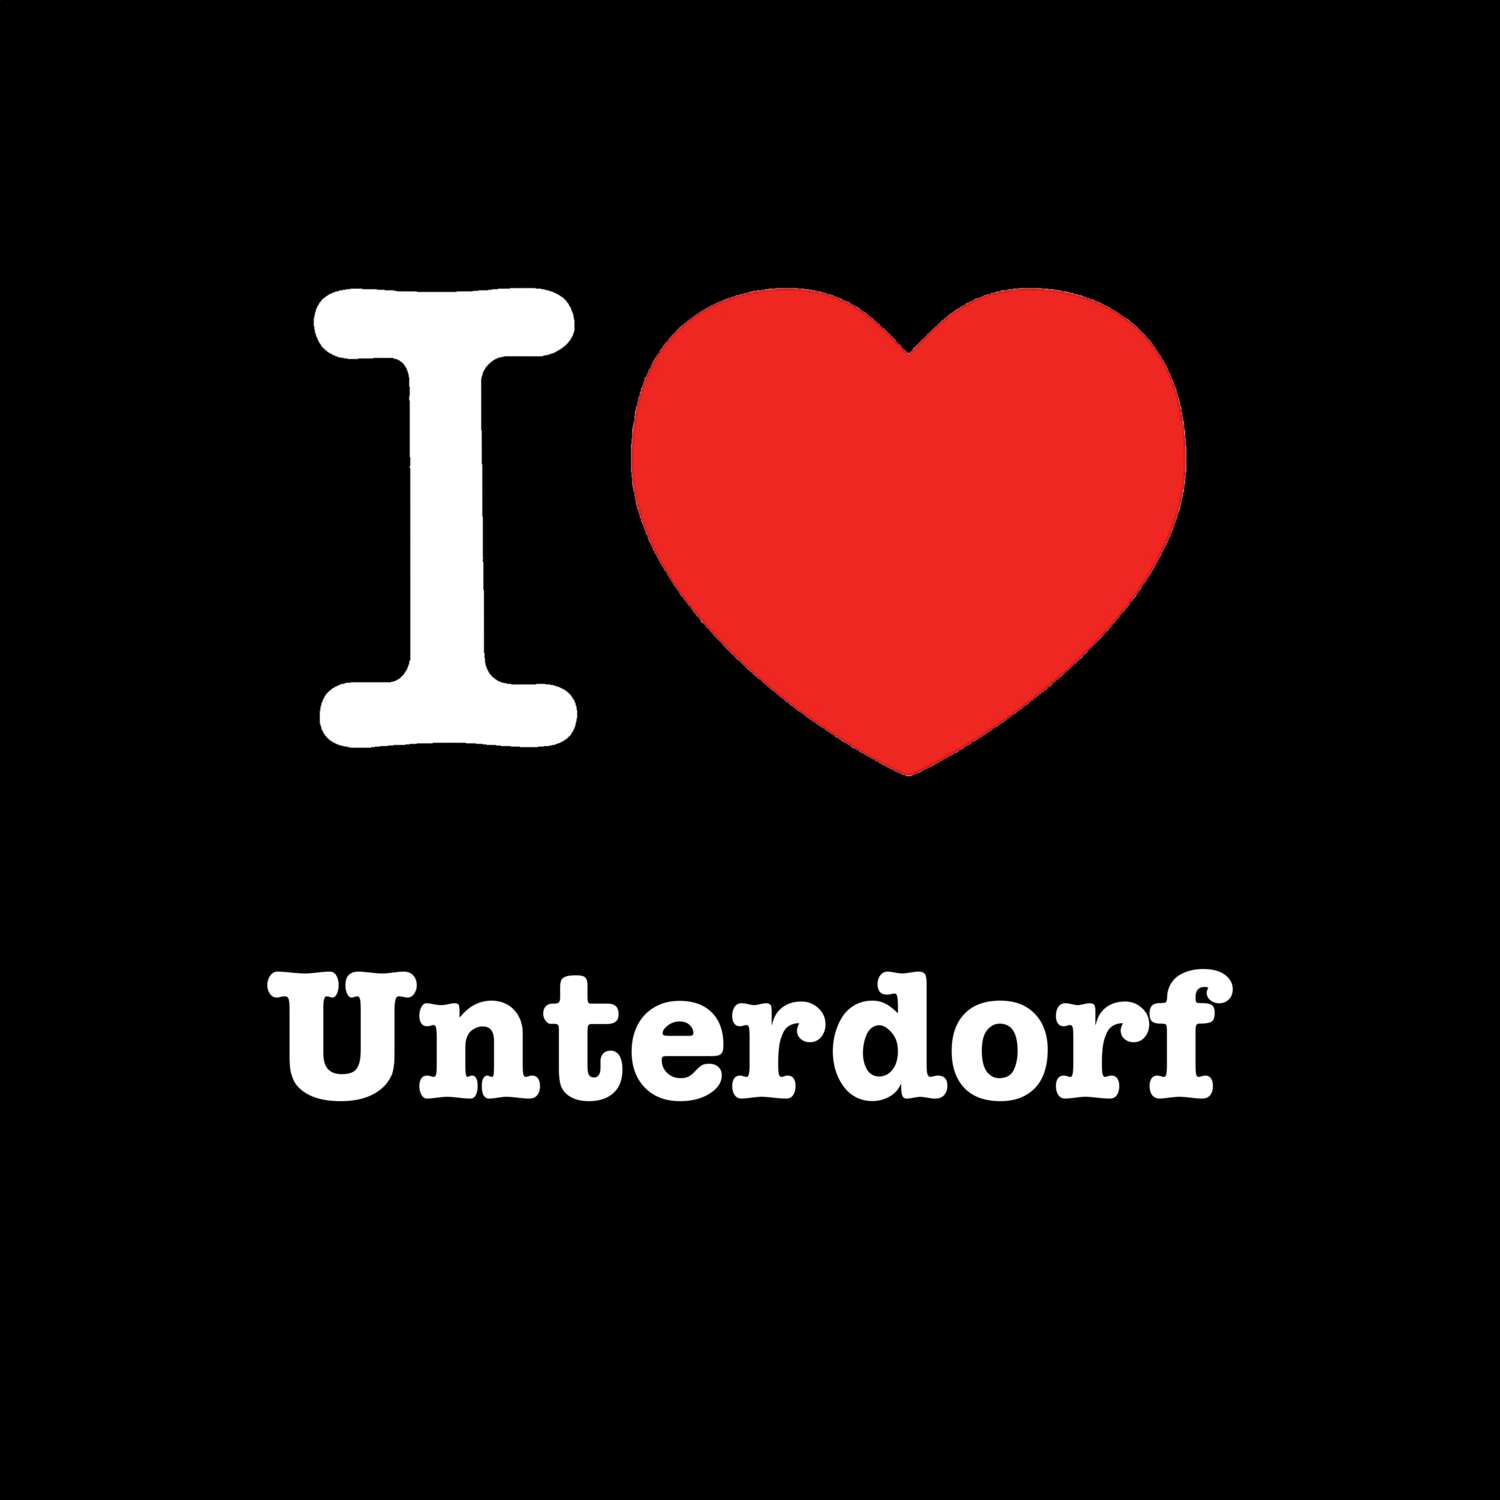 Unterdorf T-Shirt »I love«